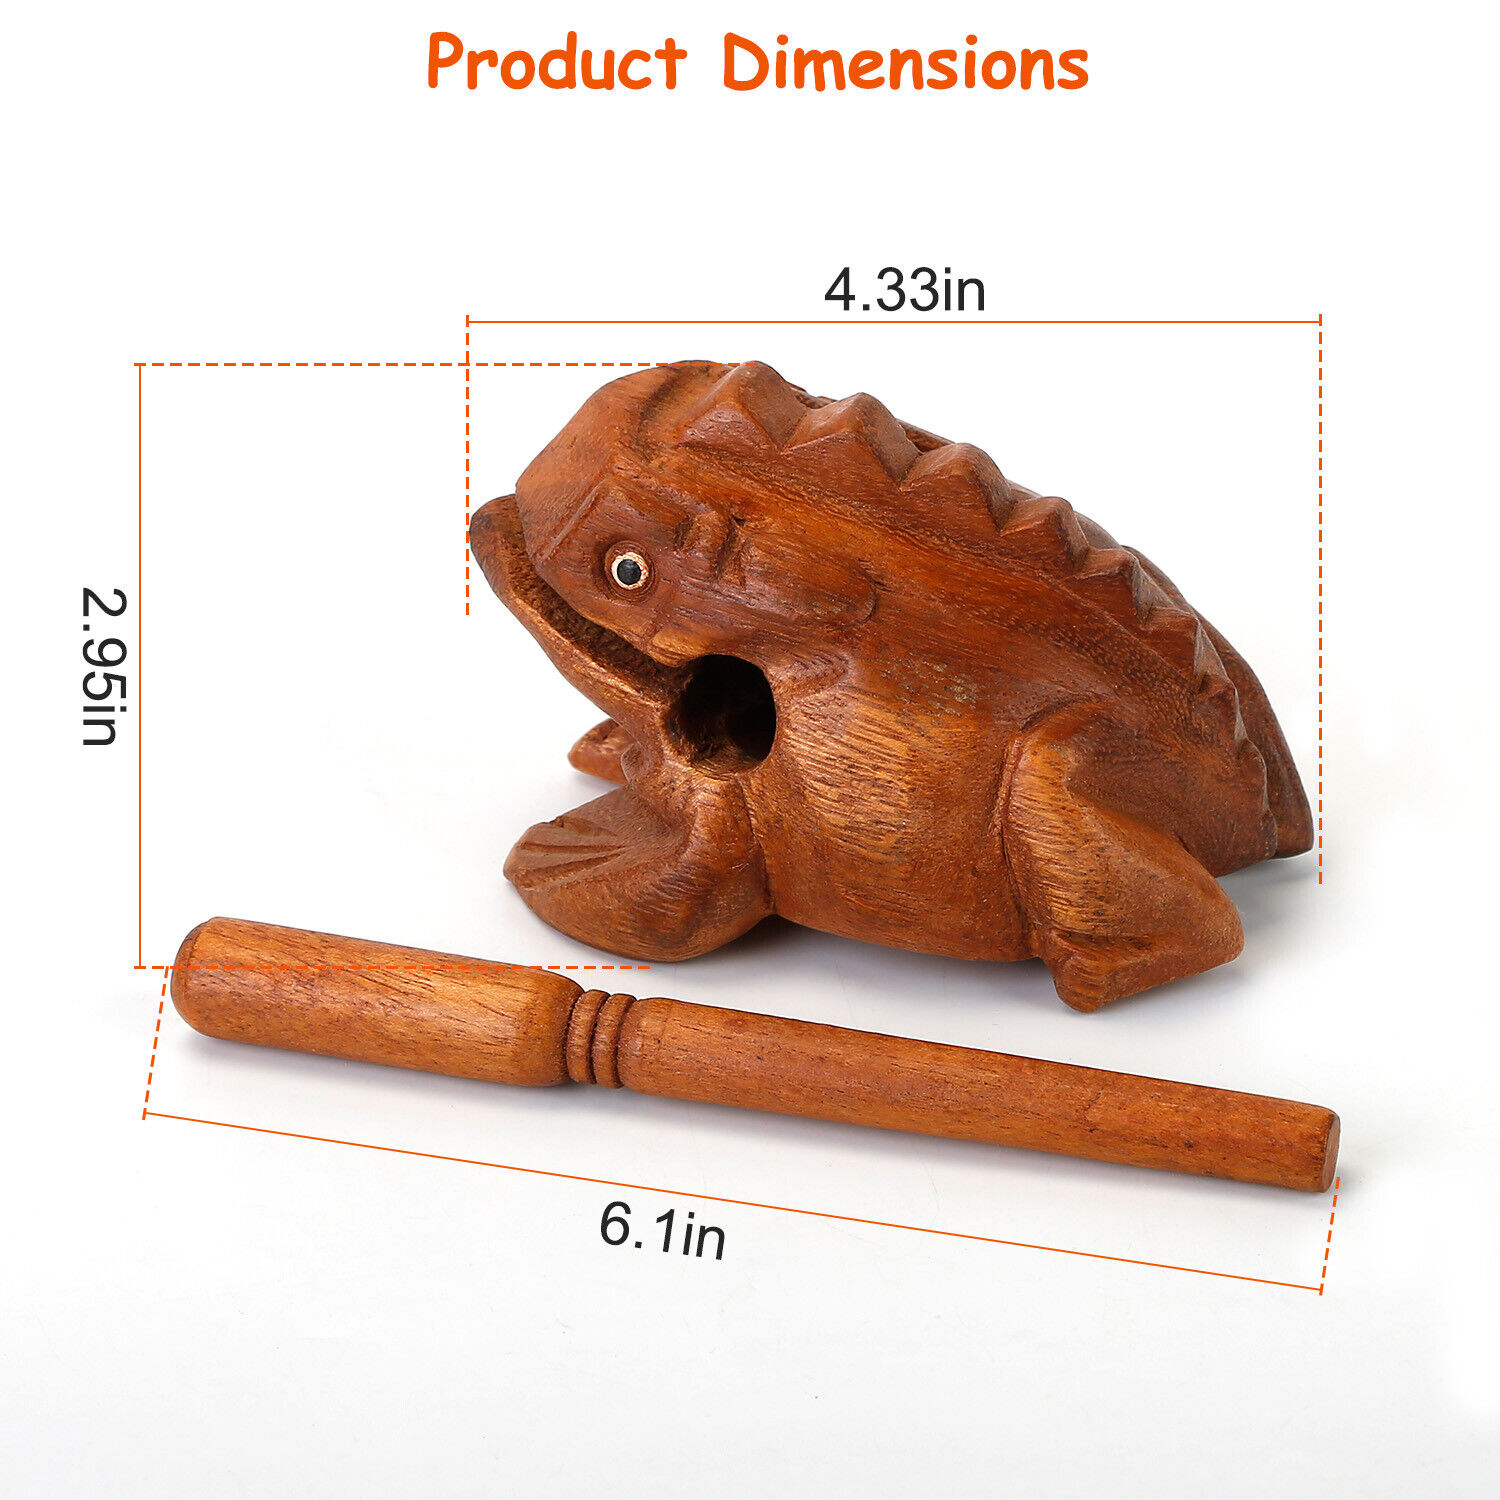 imountek 4 In Wooden Frog Rasp Handcraft Musical Instruments Africa Frog Rasp Super Guiro